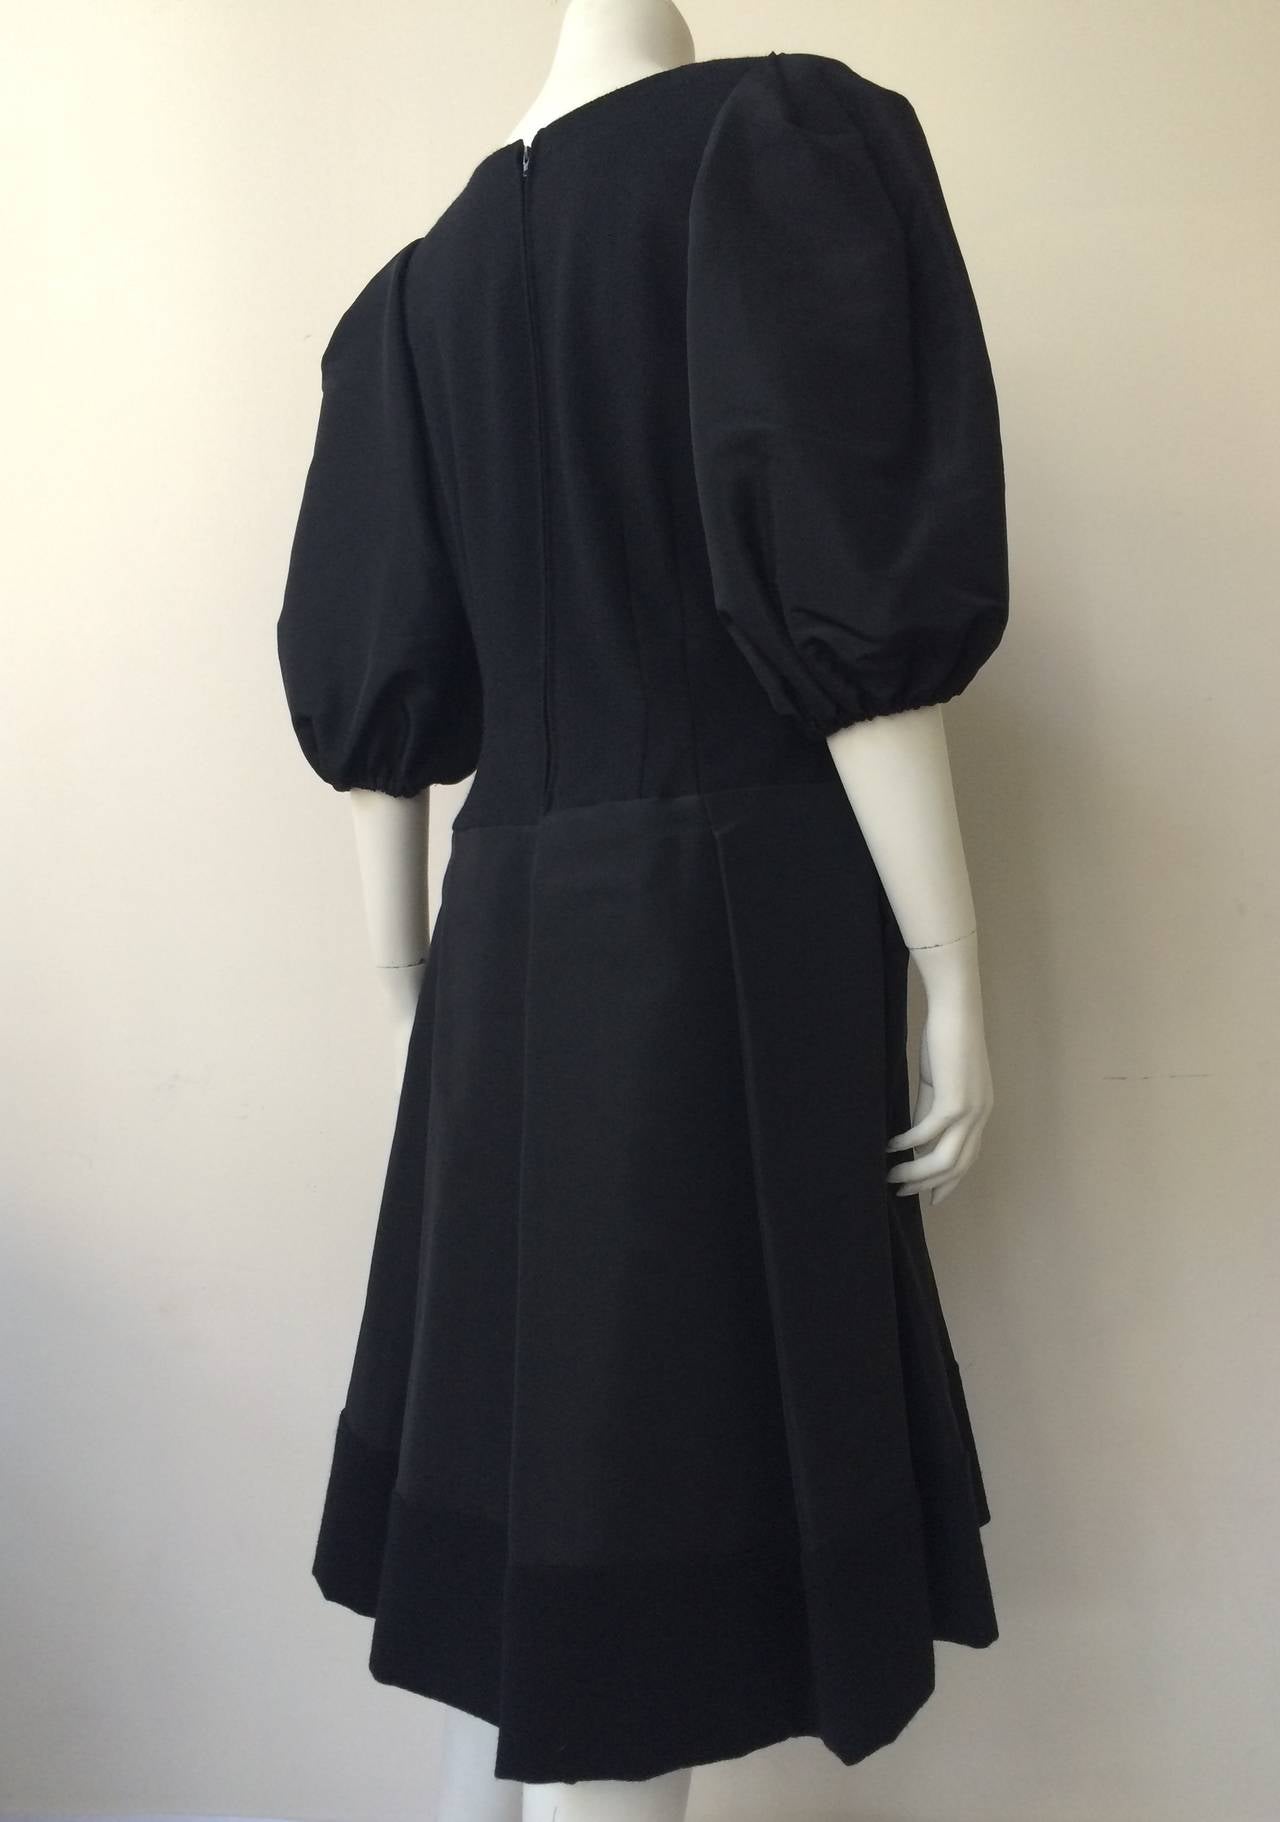 Pauline Trigere 1980s Black Evening Cocktail Dress Size 6/8. For Sale 1